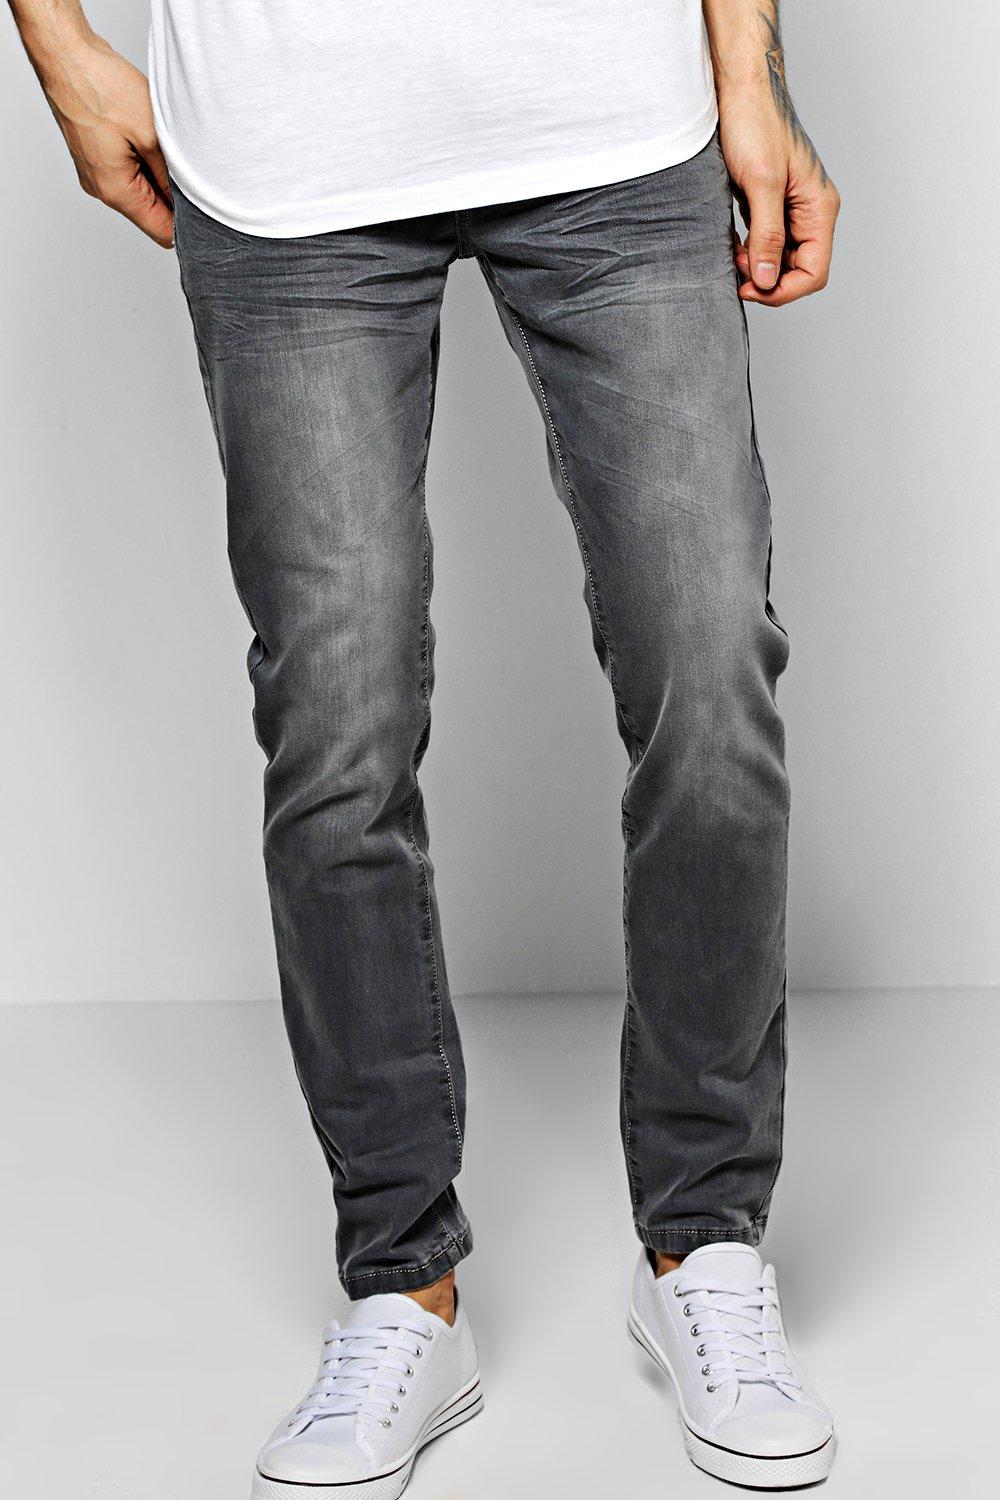 grey wash jeans